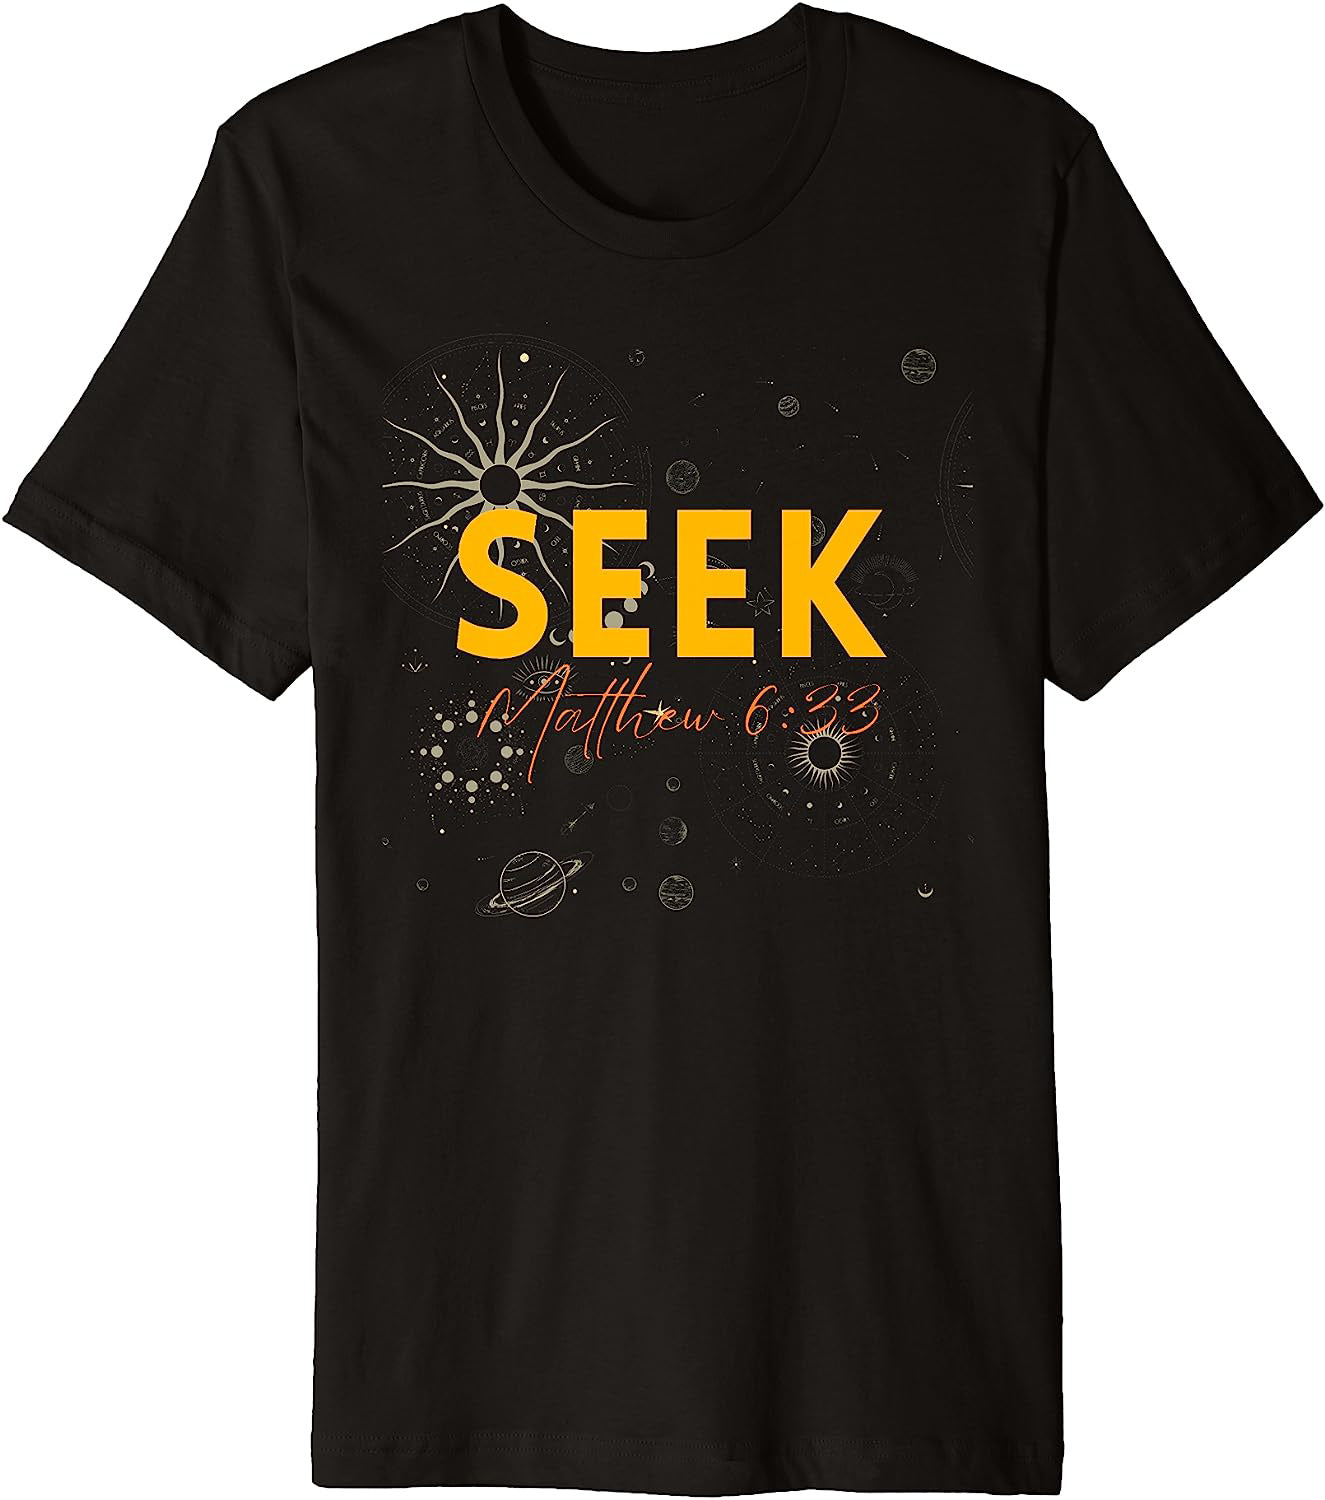 Seek - Premium T-Shirt - Fun and Inspirational Design by Crucial Key